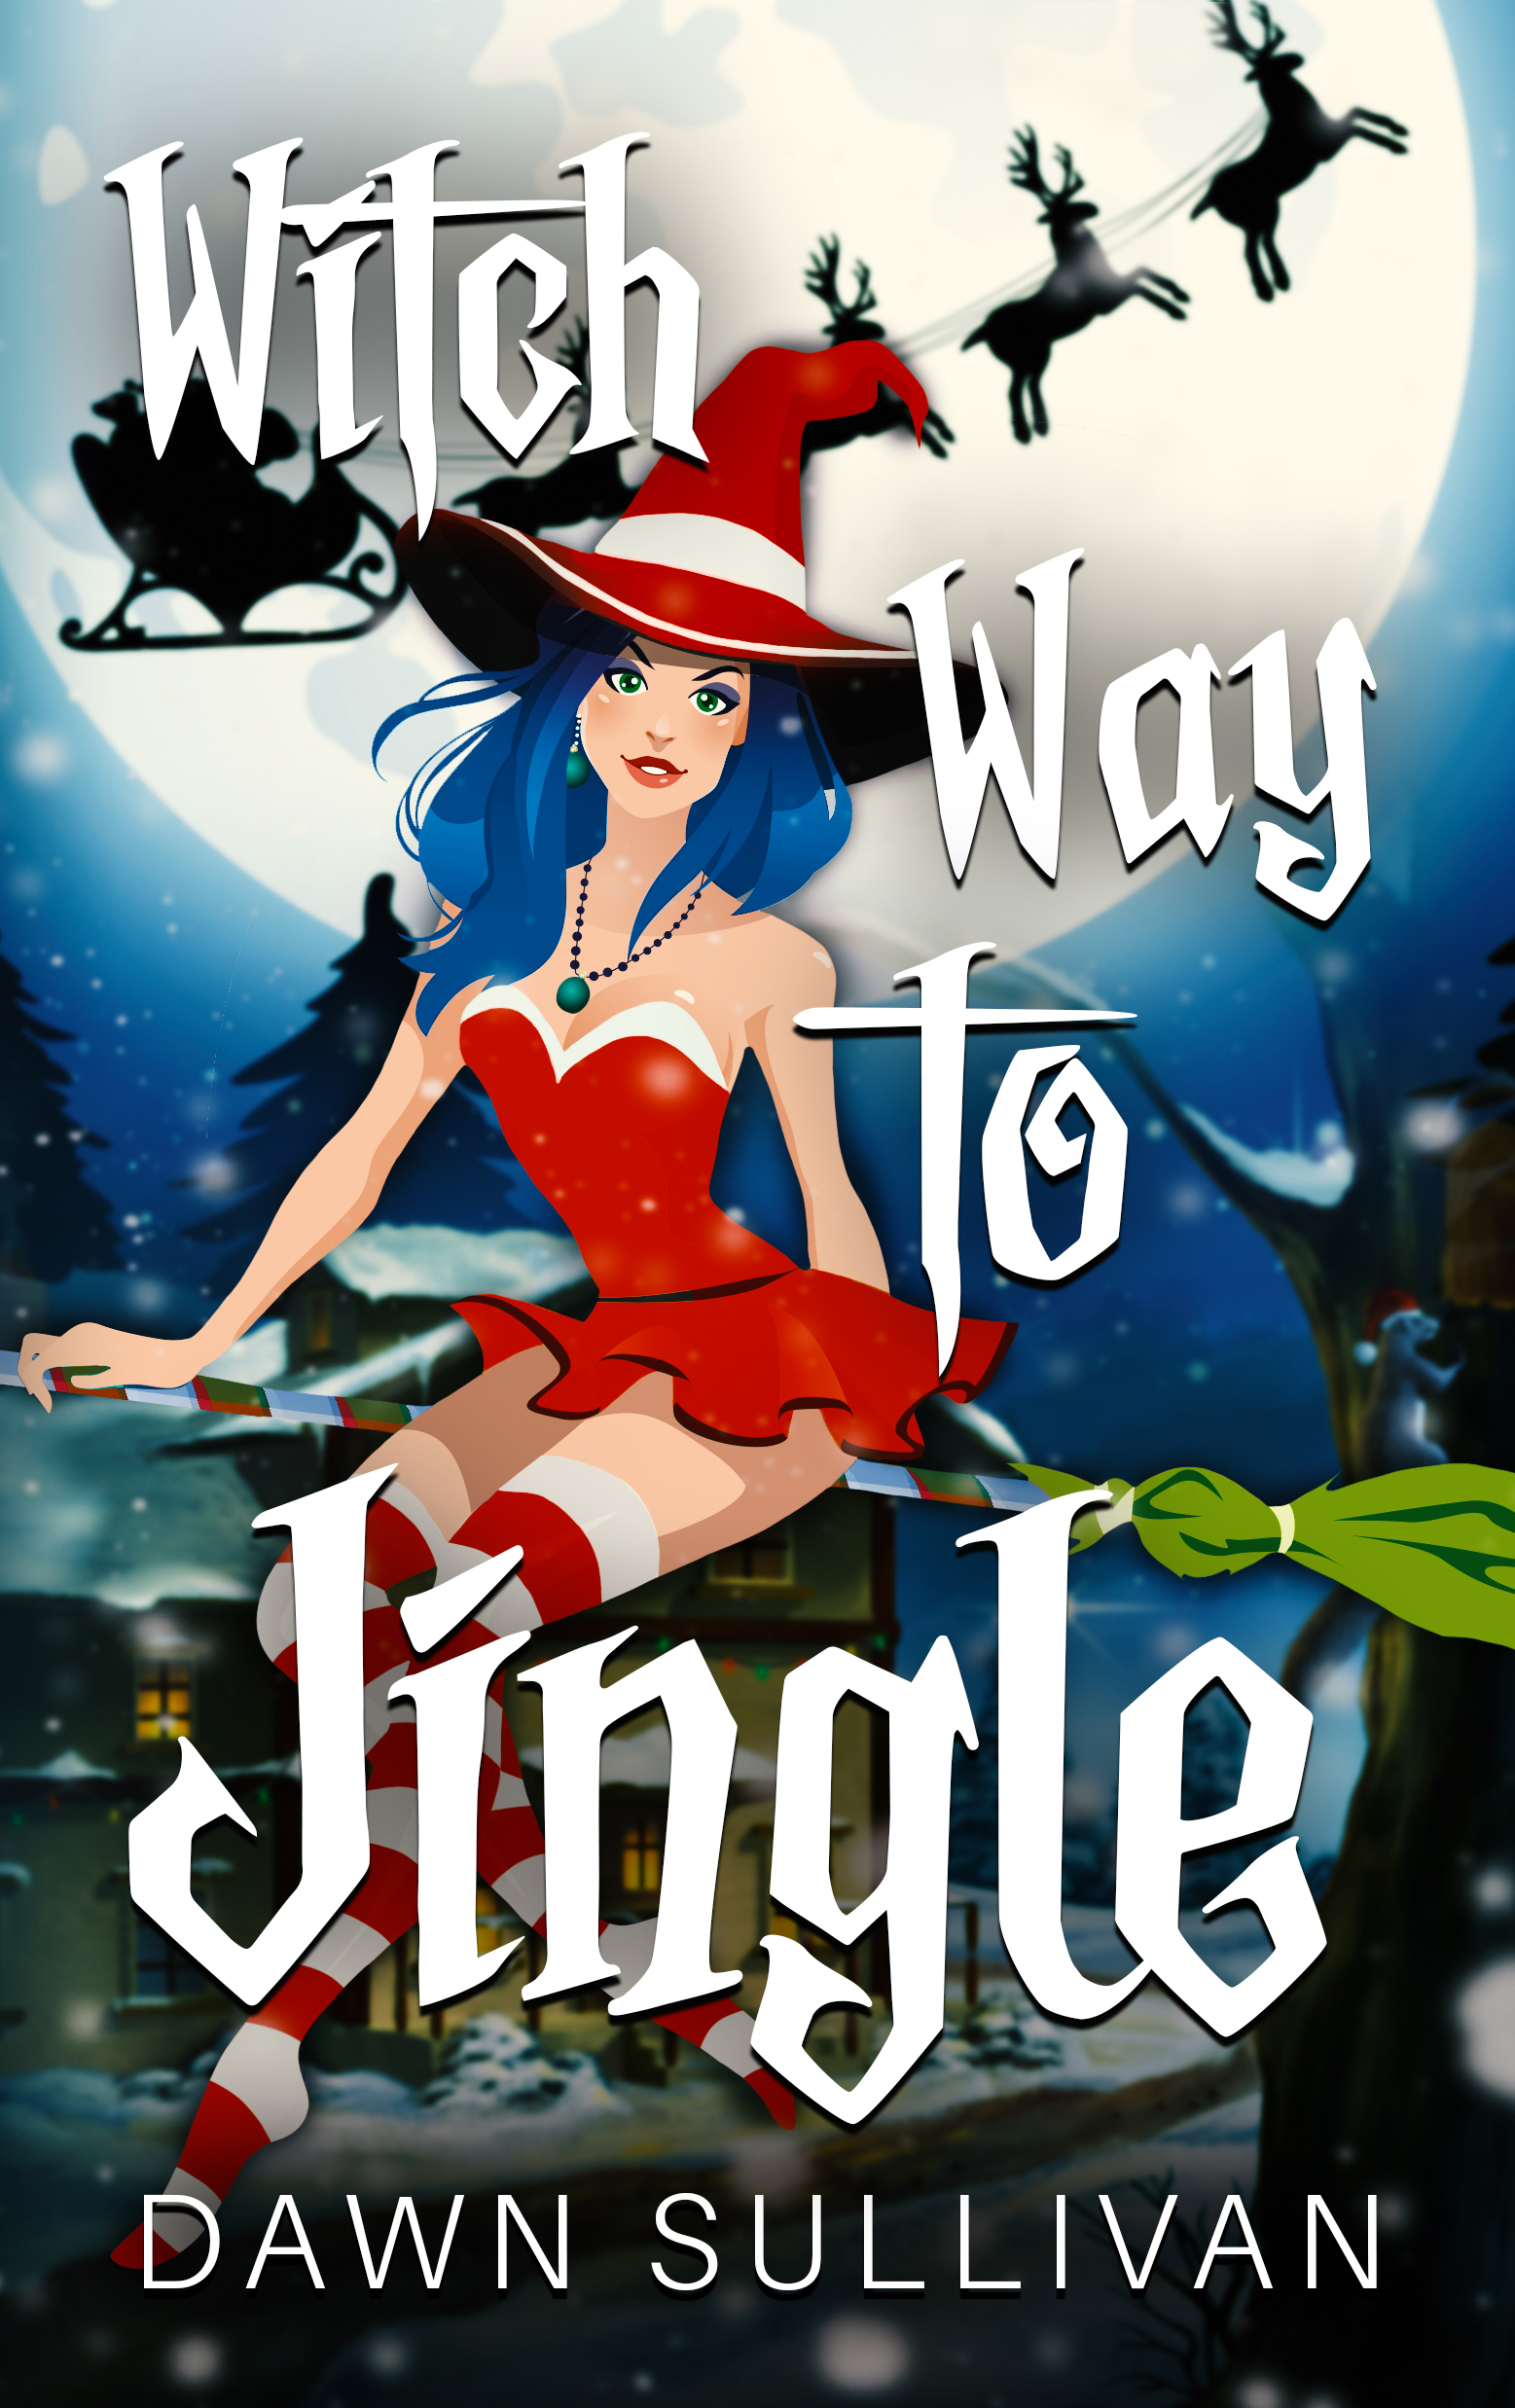 Witch Way To Jingle - E-Cover